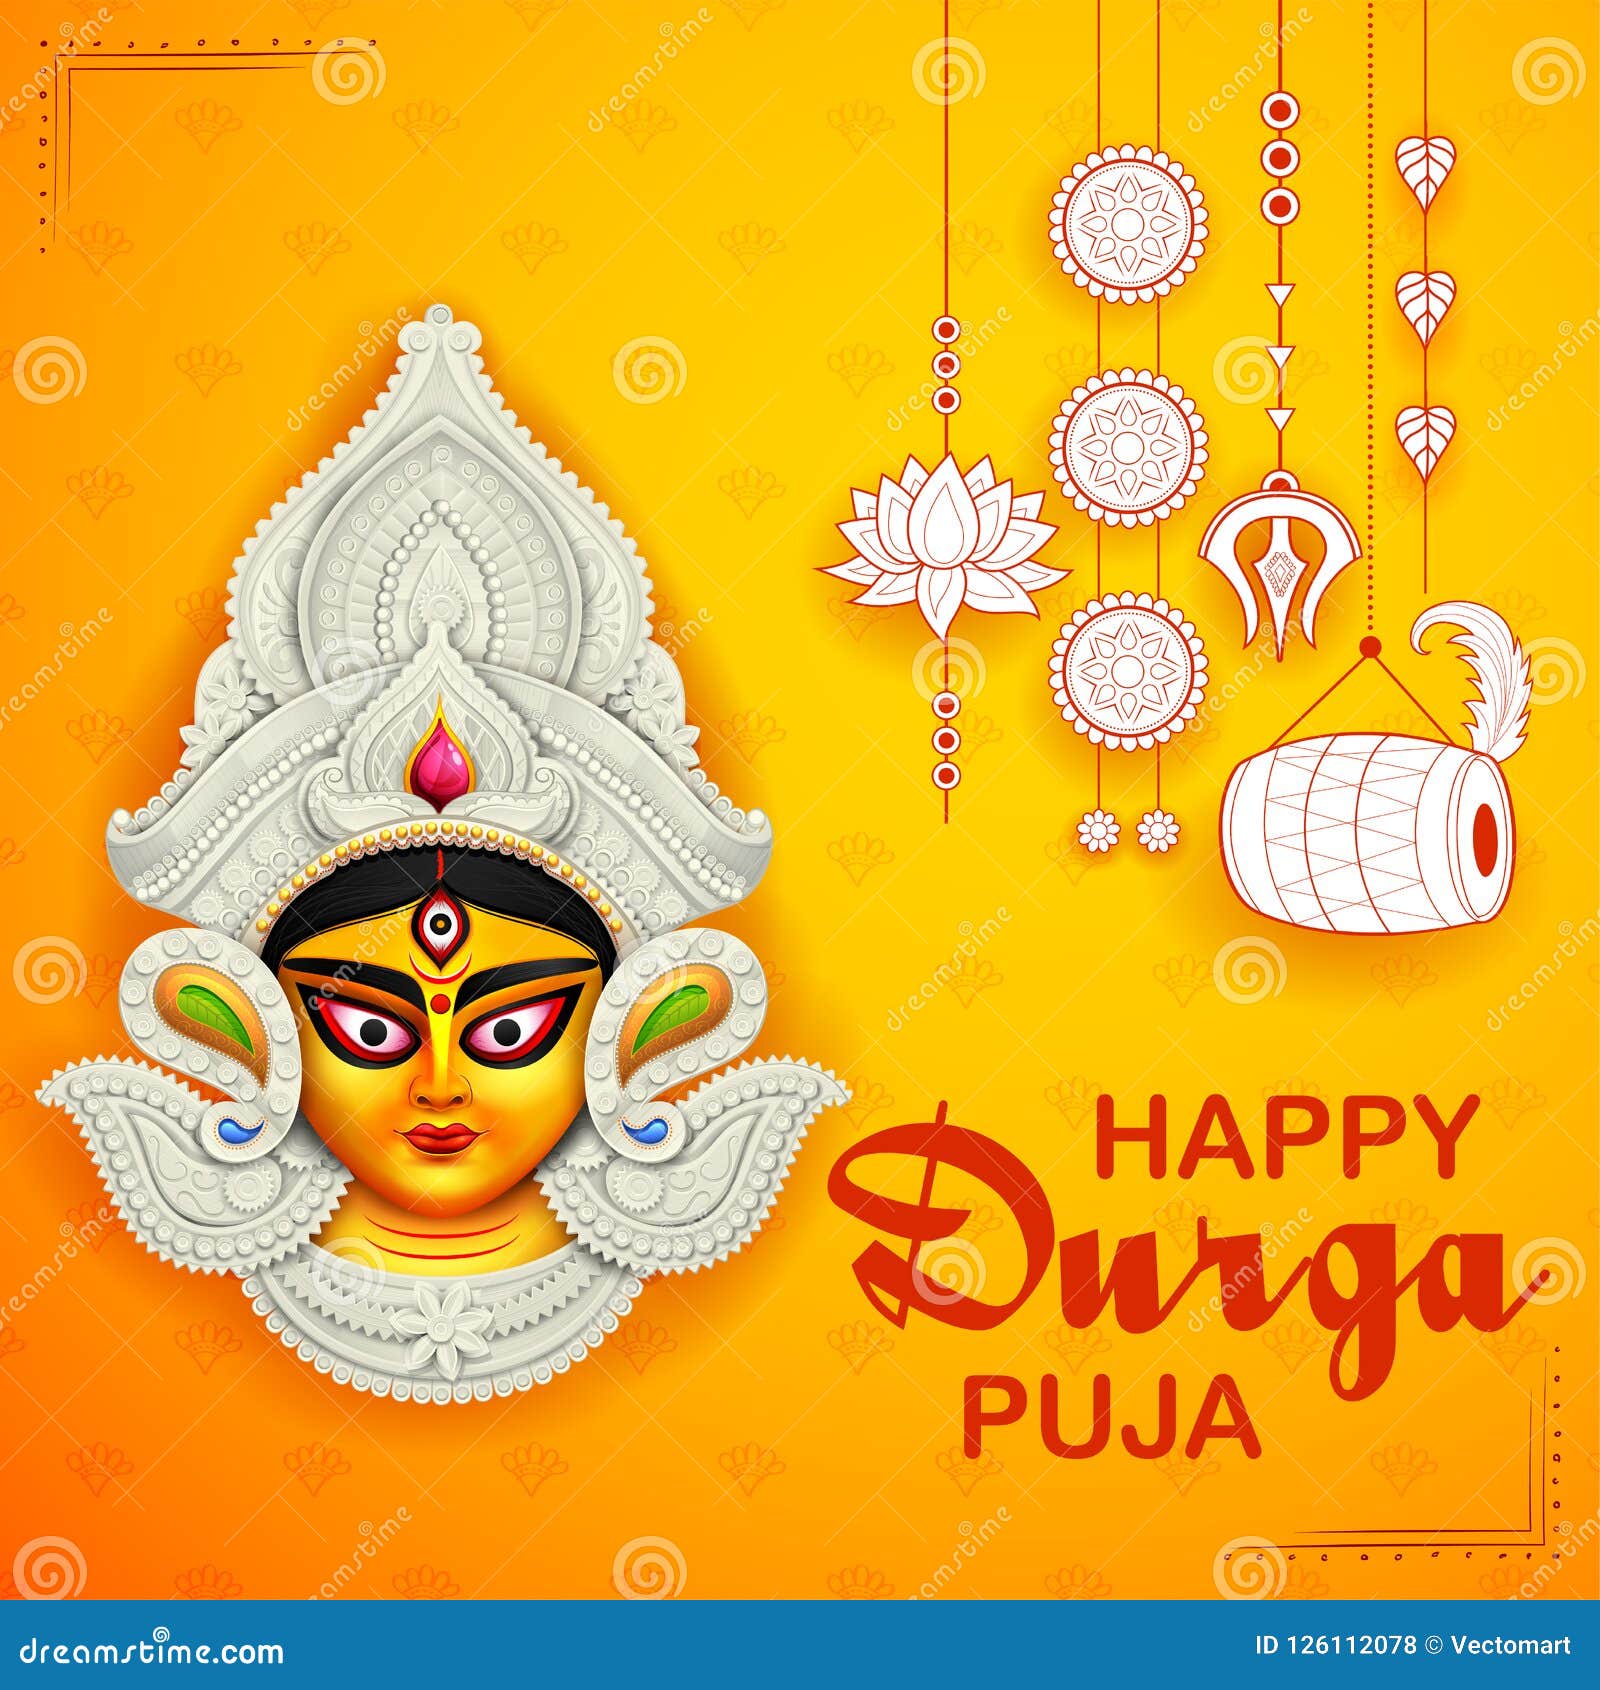 goddess durga face in happy durga puja subh navratri background